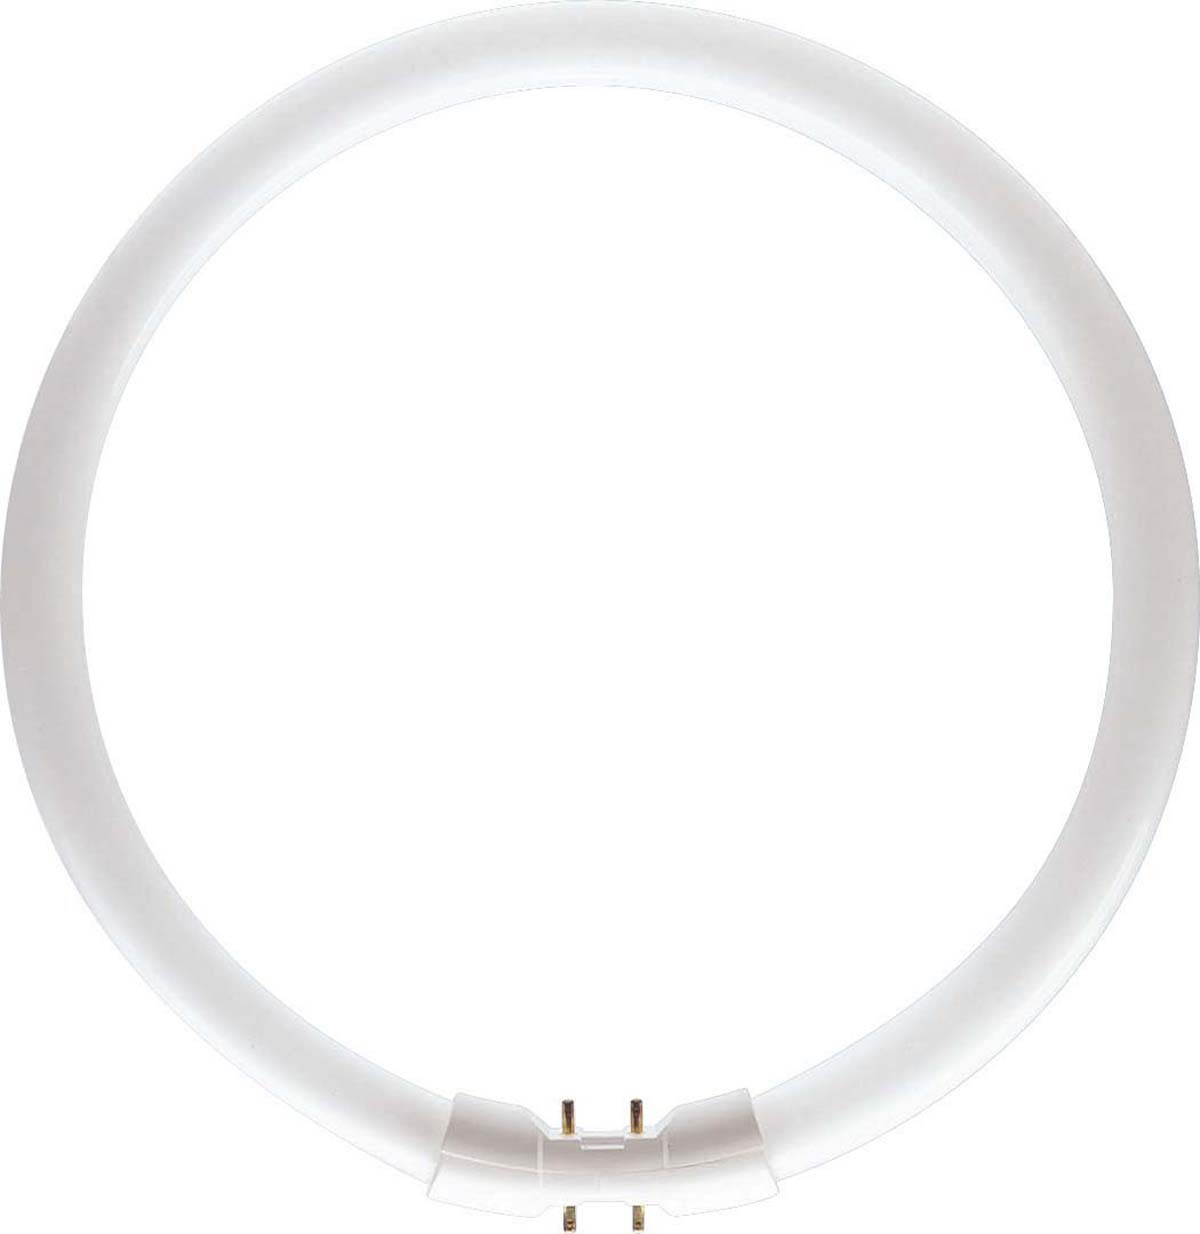 Philips Lighting Leuchtstofflampe 40W wws ringförmig TL5 C 40W/830 